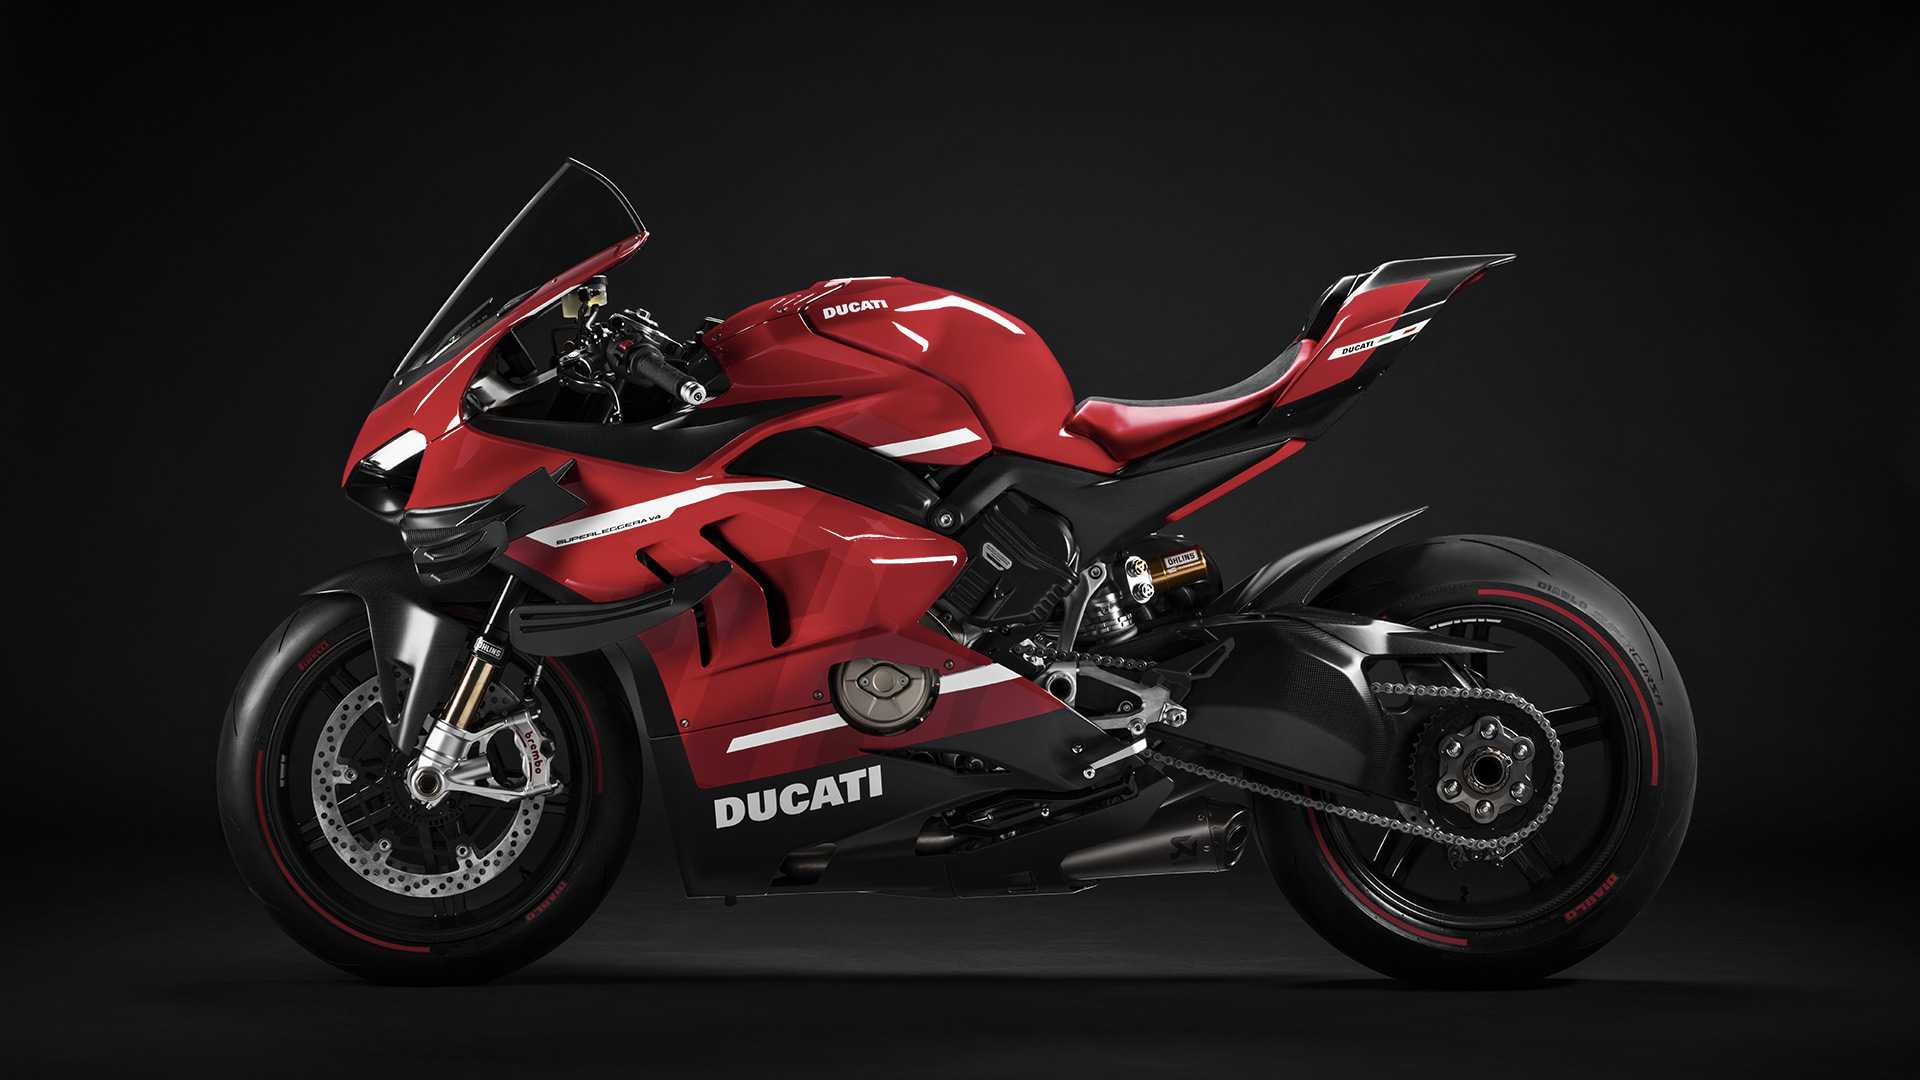 Ducati Streetfighter(杜卡迪街头霸王)848 2012(3) - 25H.NET壁纸库